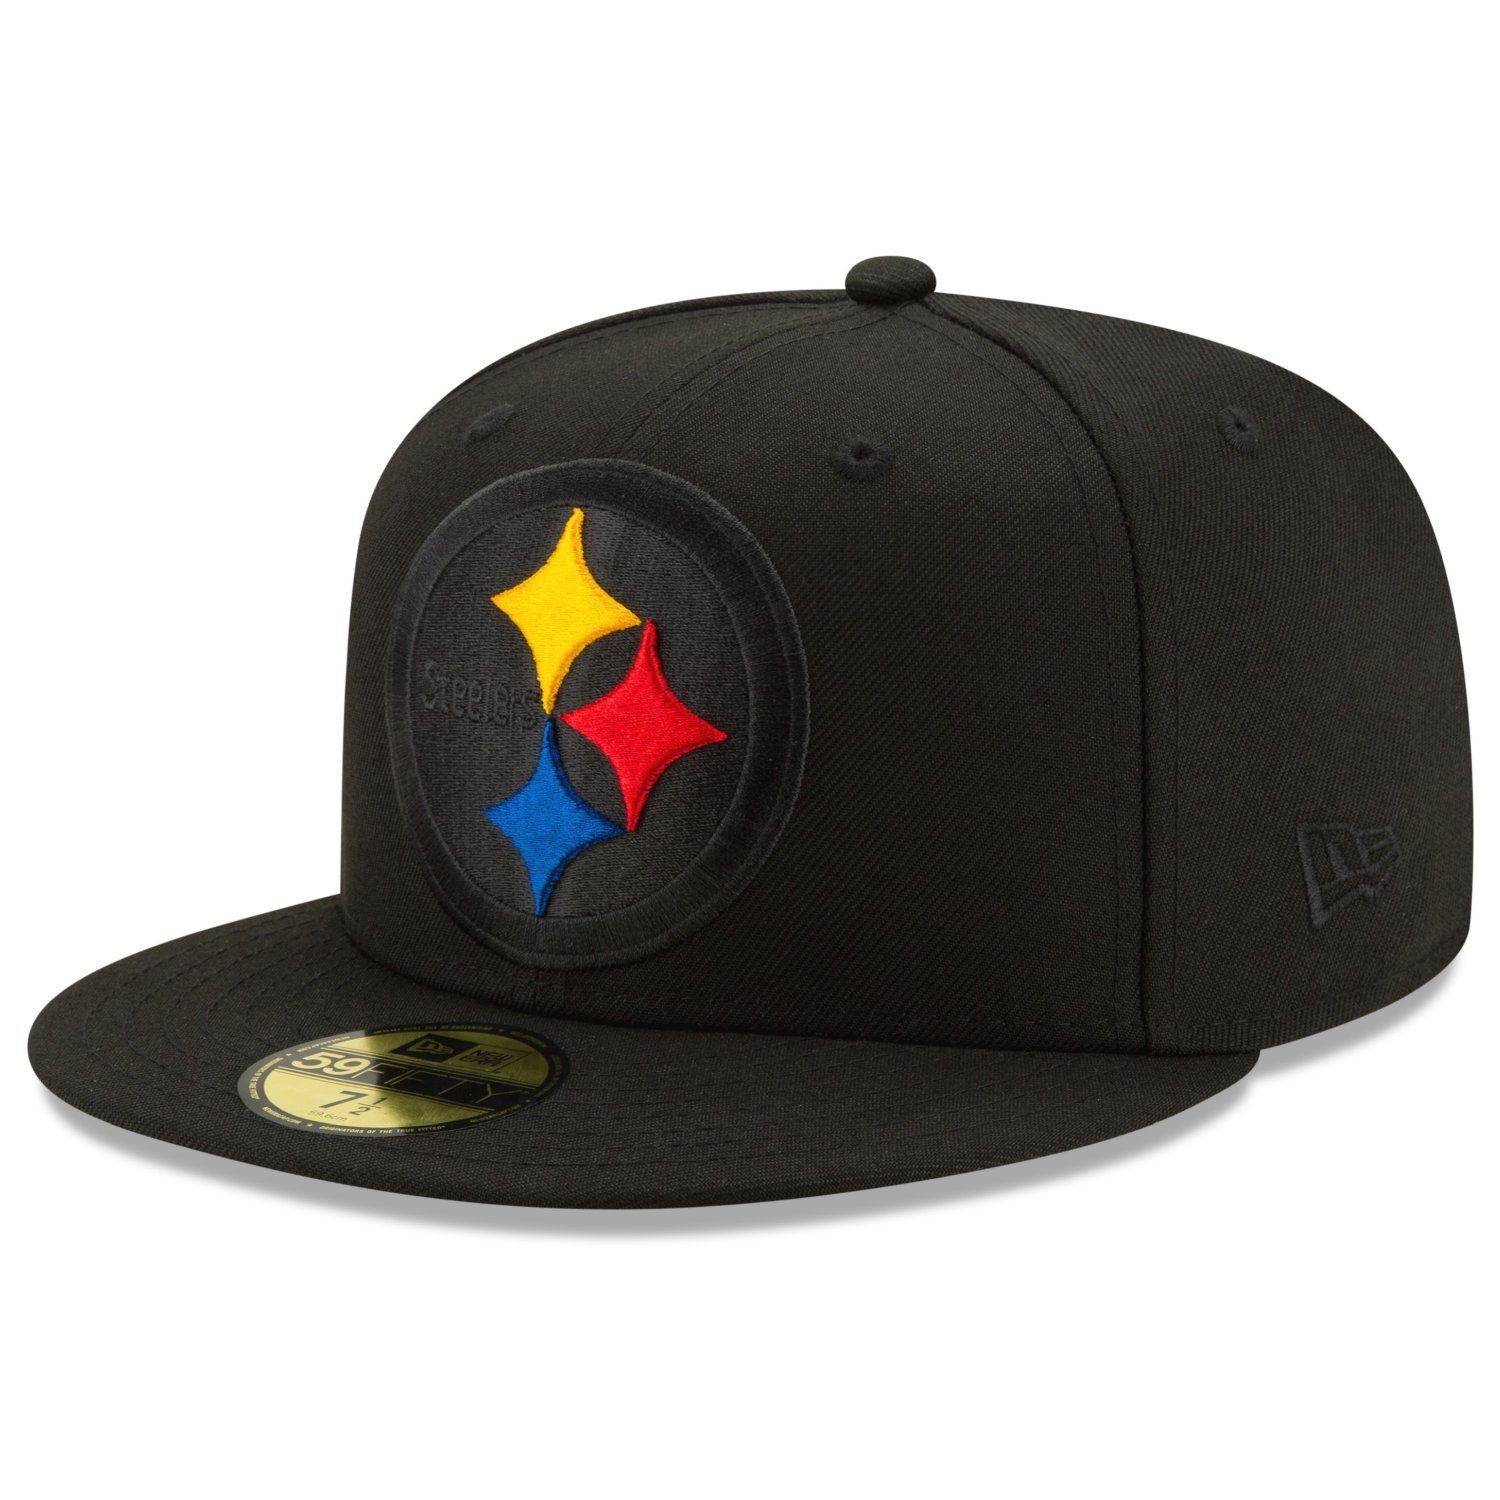 Beliebter Sonderpreis New Era Fitted Cap Steelers 2.0 59Fifty ELEMENTS Pittsburgh NFL